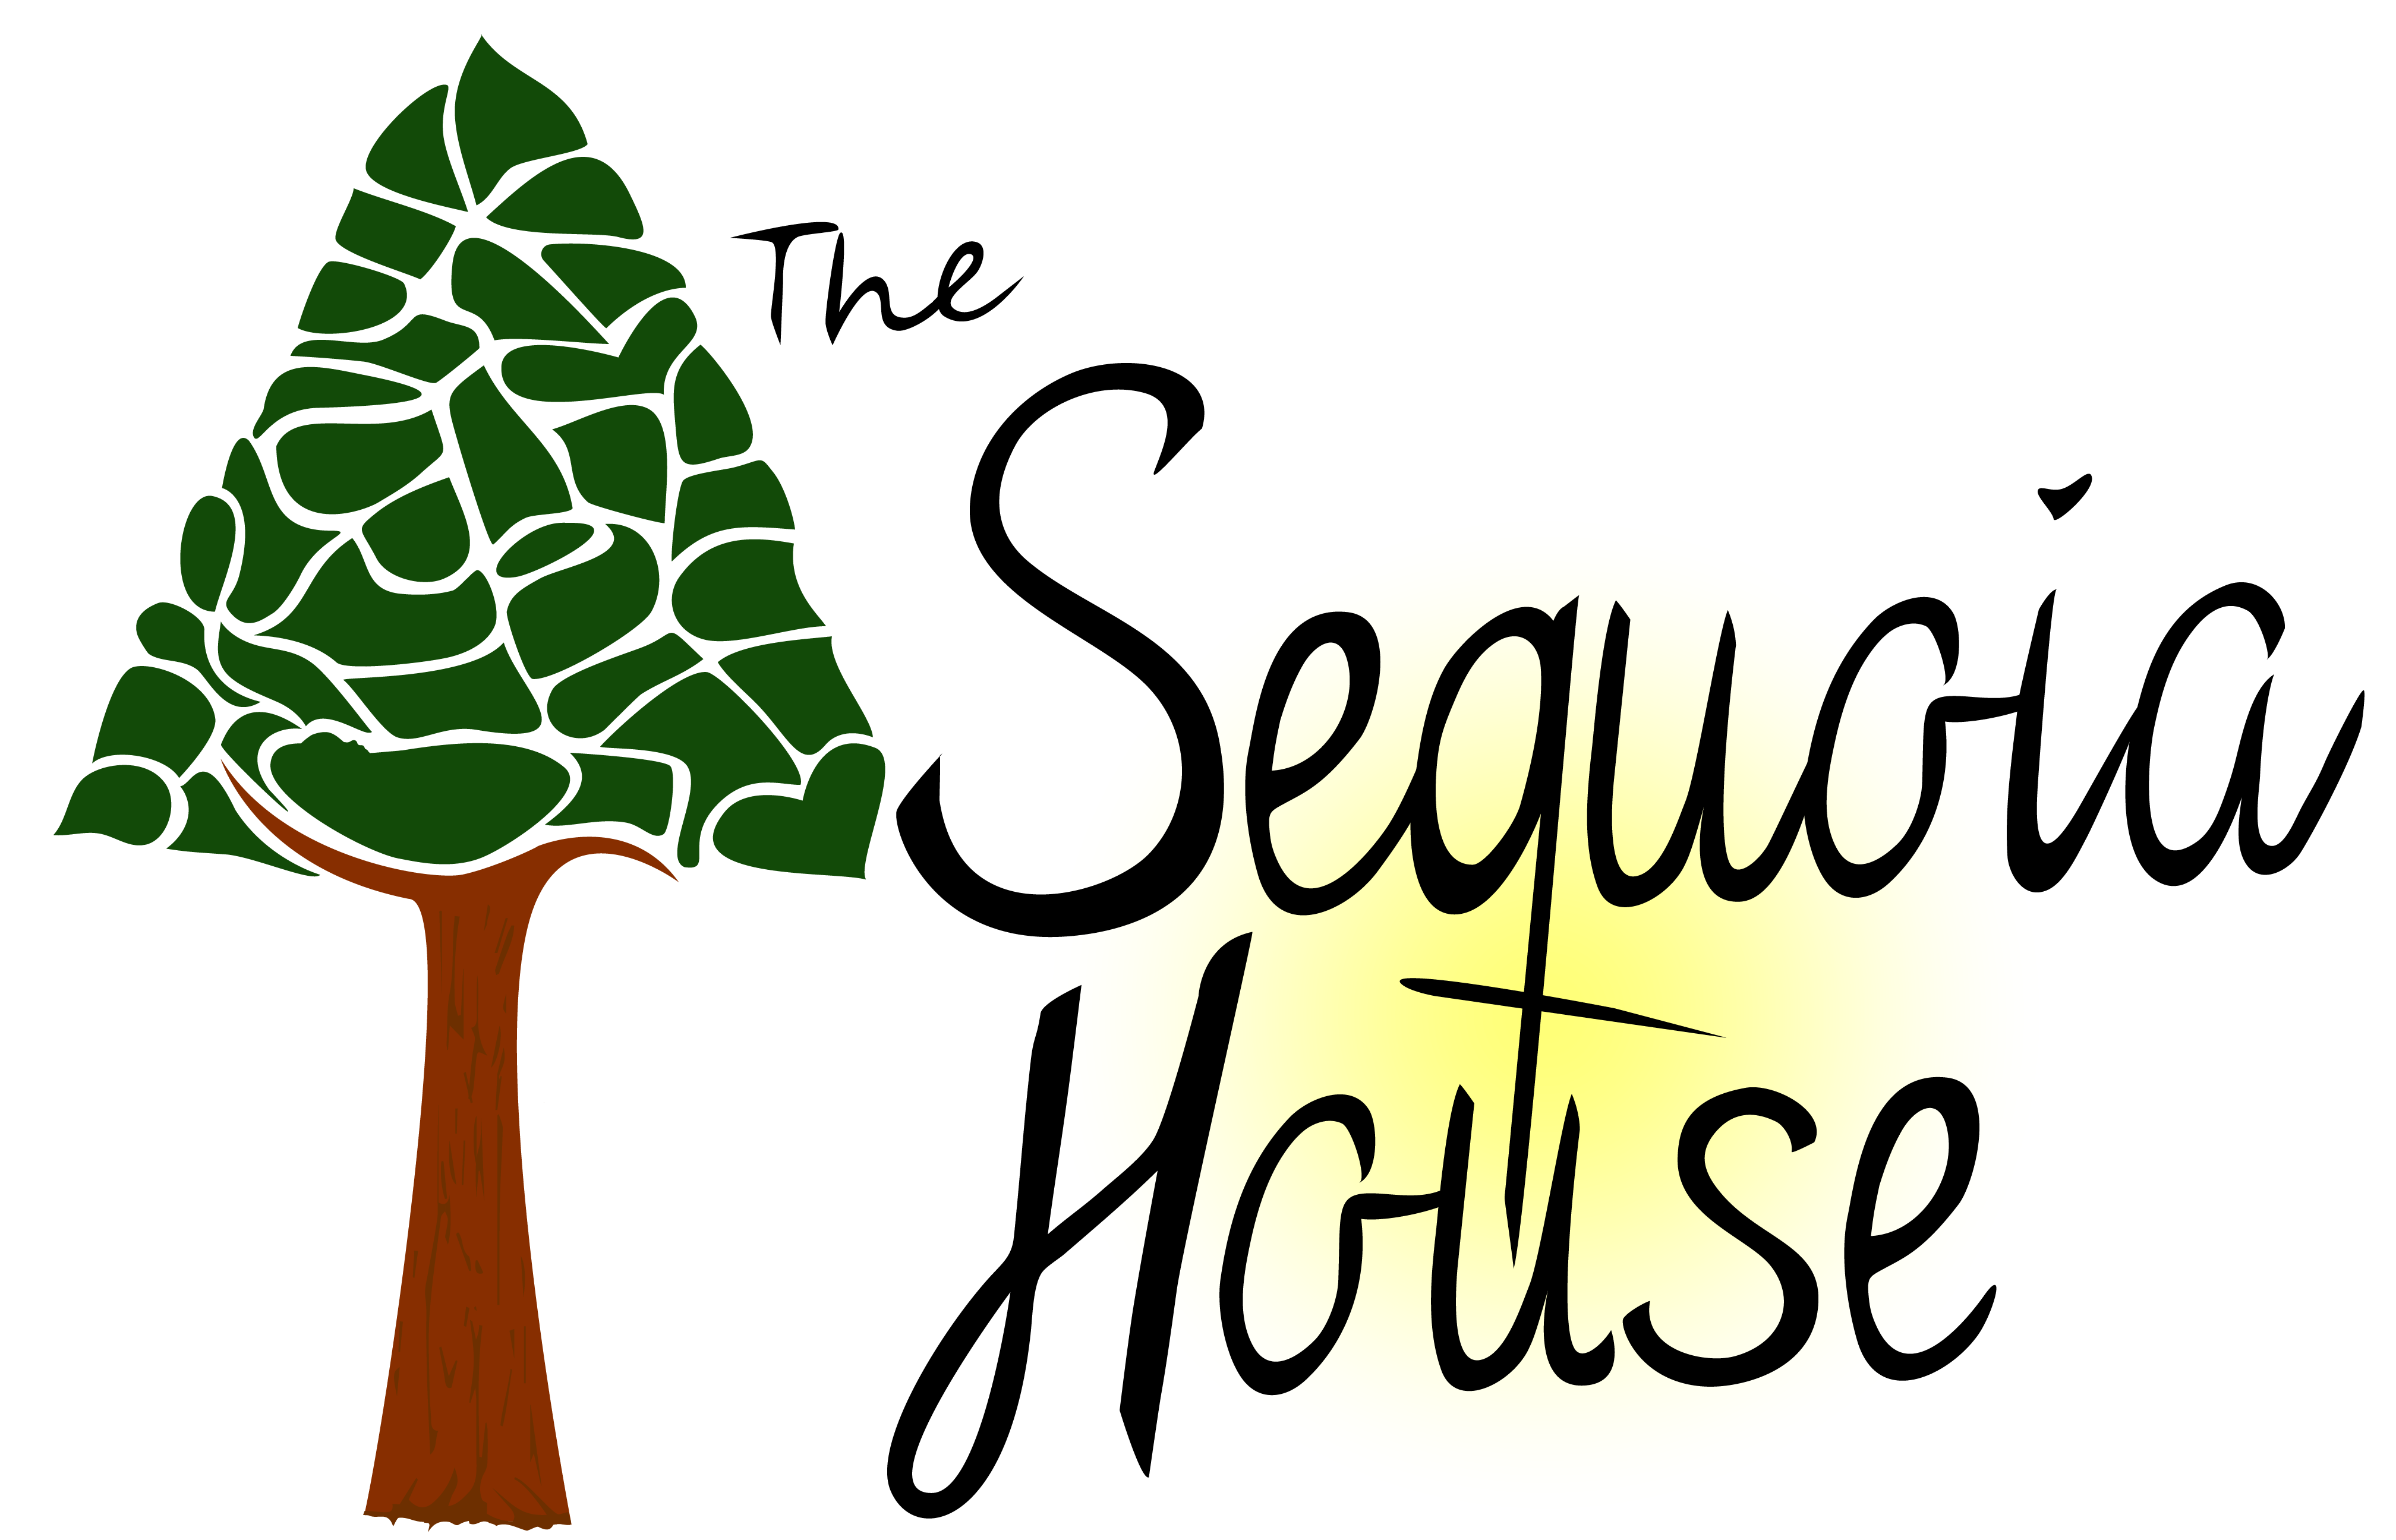 The Sequoia House